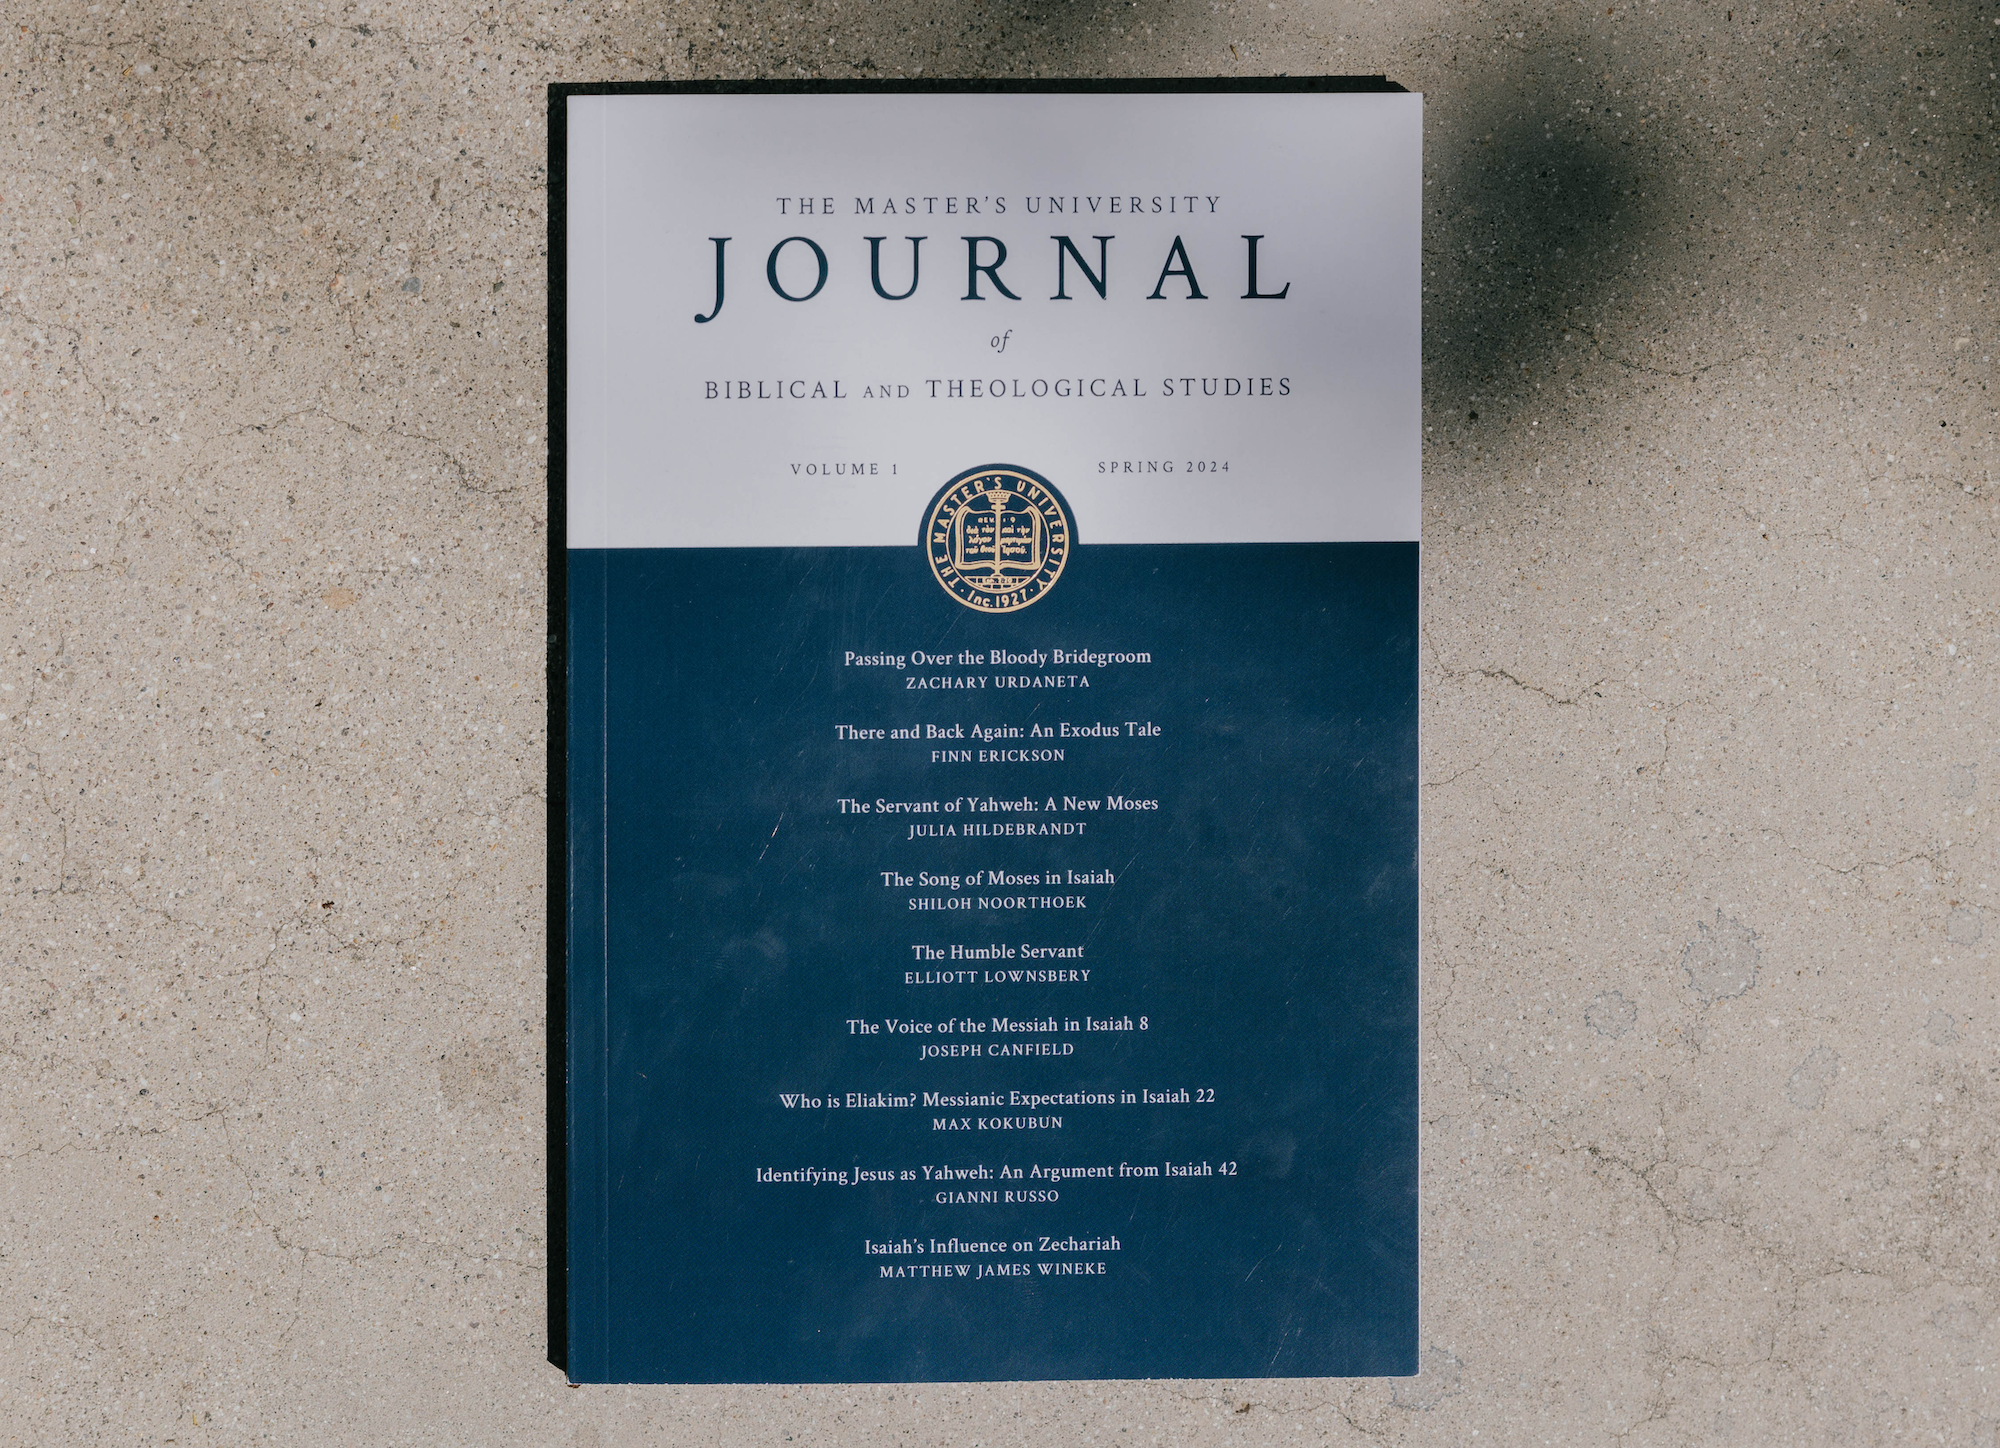 TMU Launches Student Academic Journal